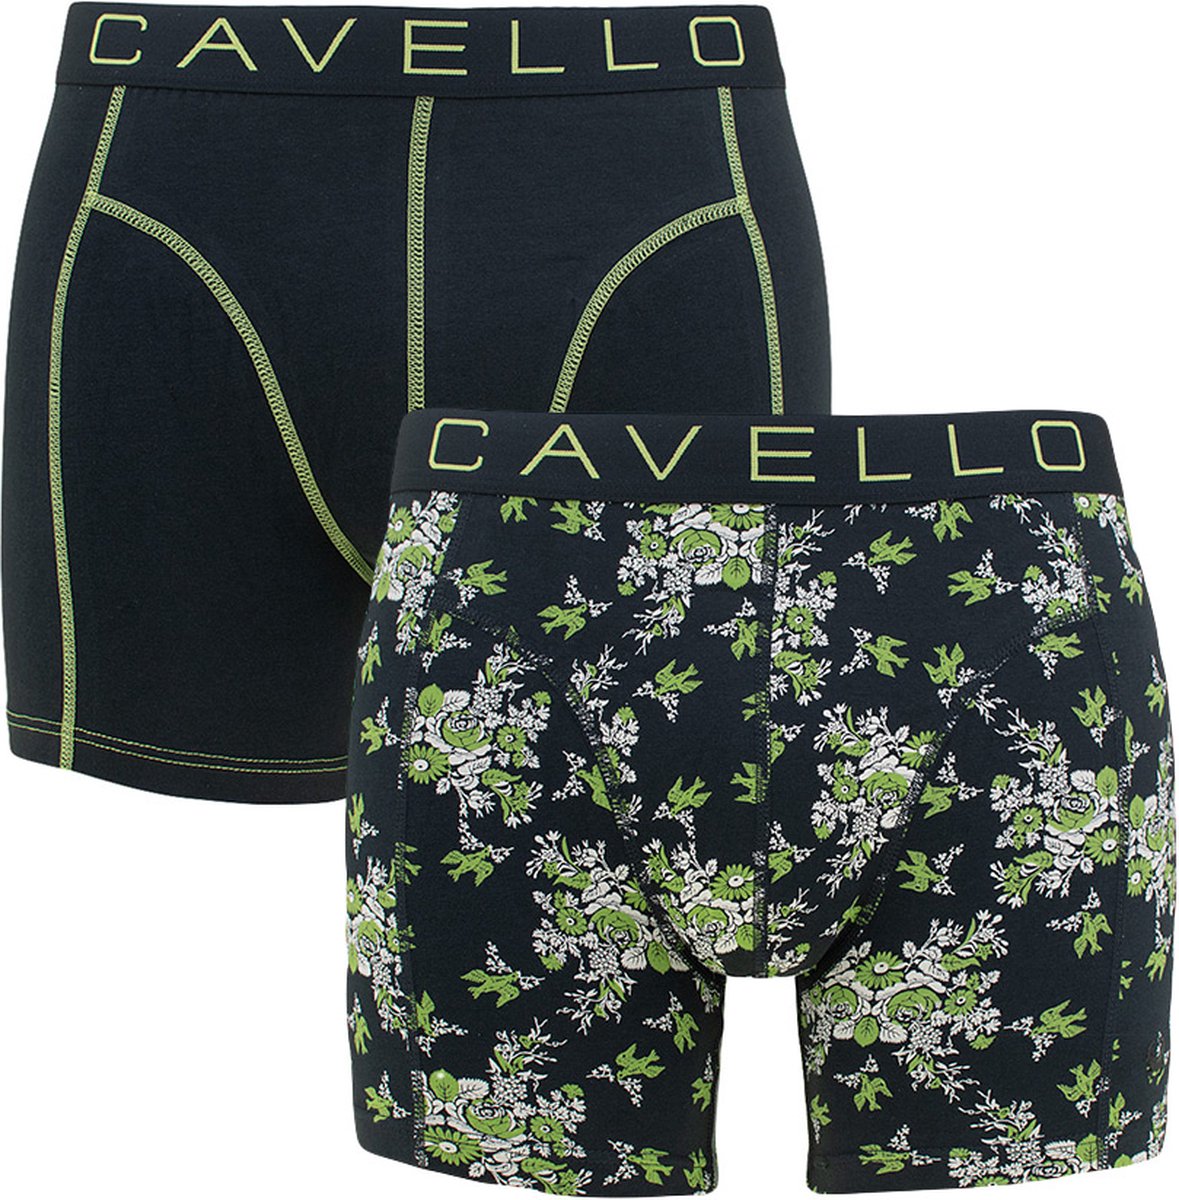 Cavello 2P mixed flowers zwart - XXL